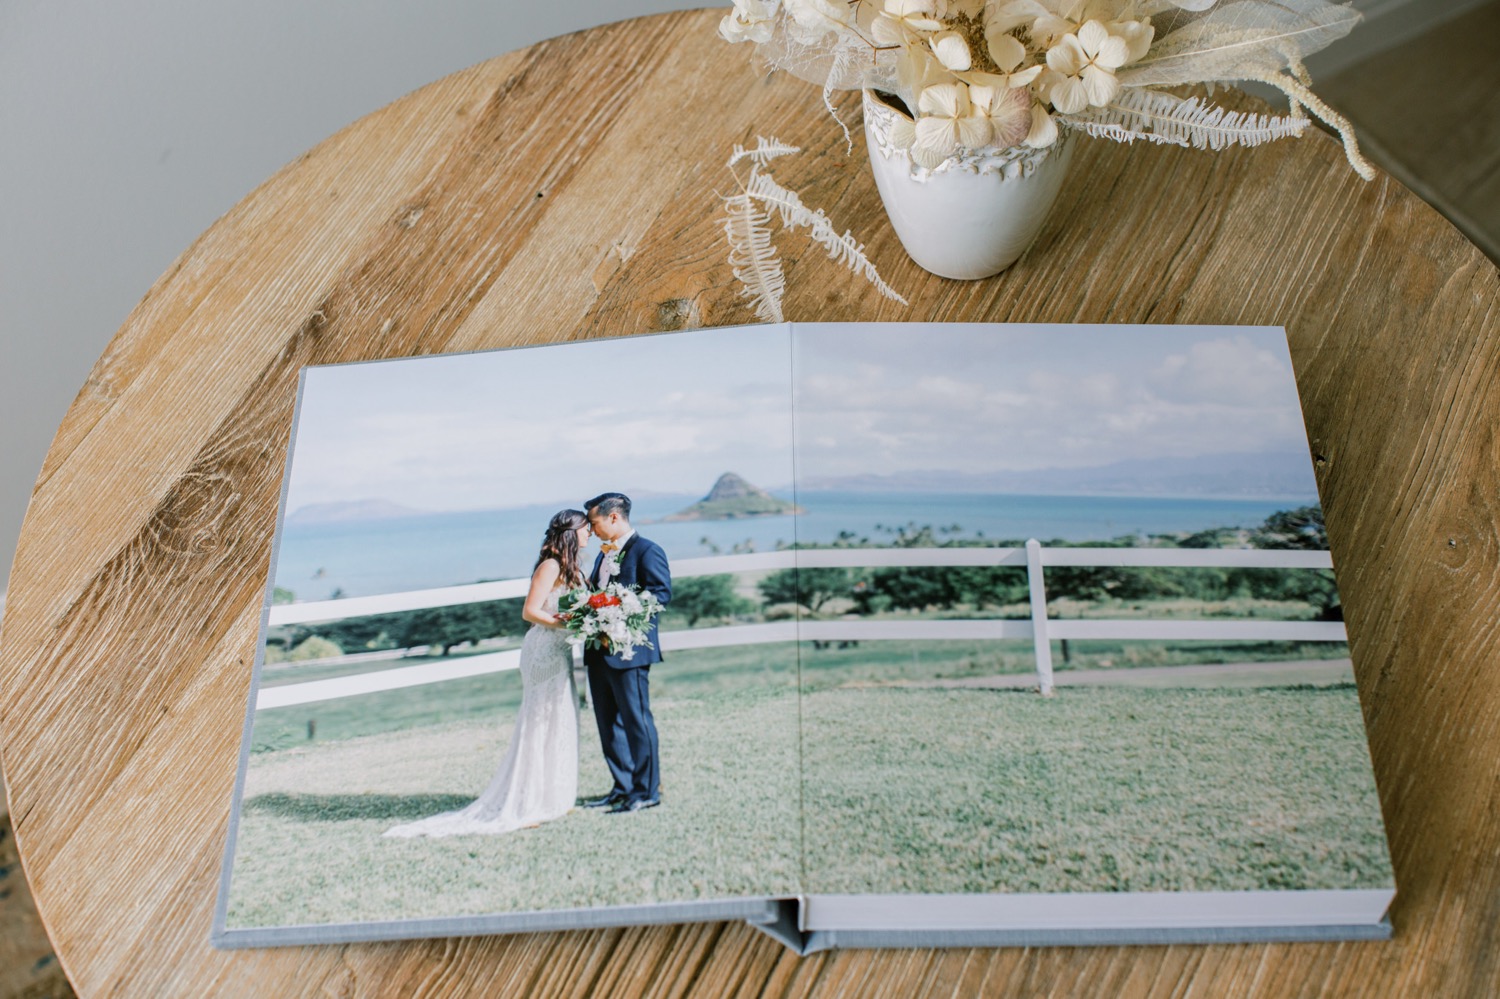 Wedding Photo Album Terminology Explained